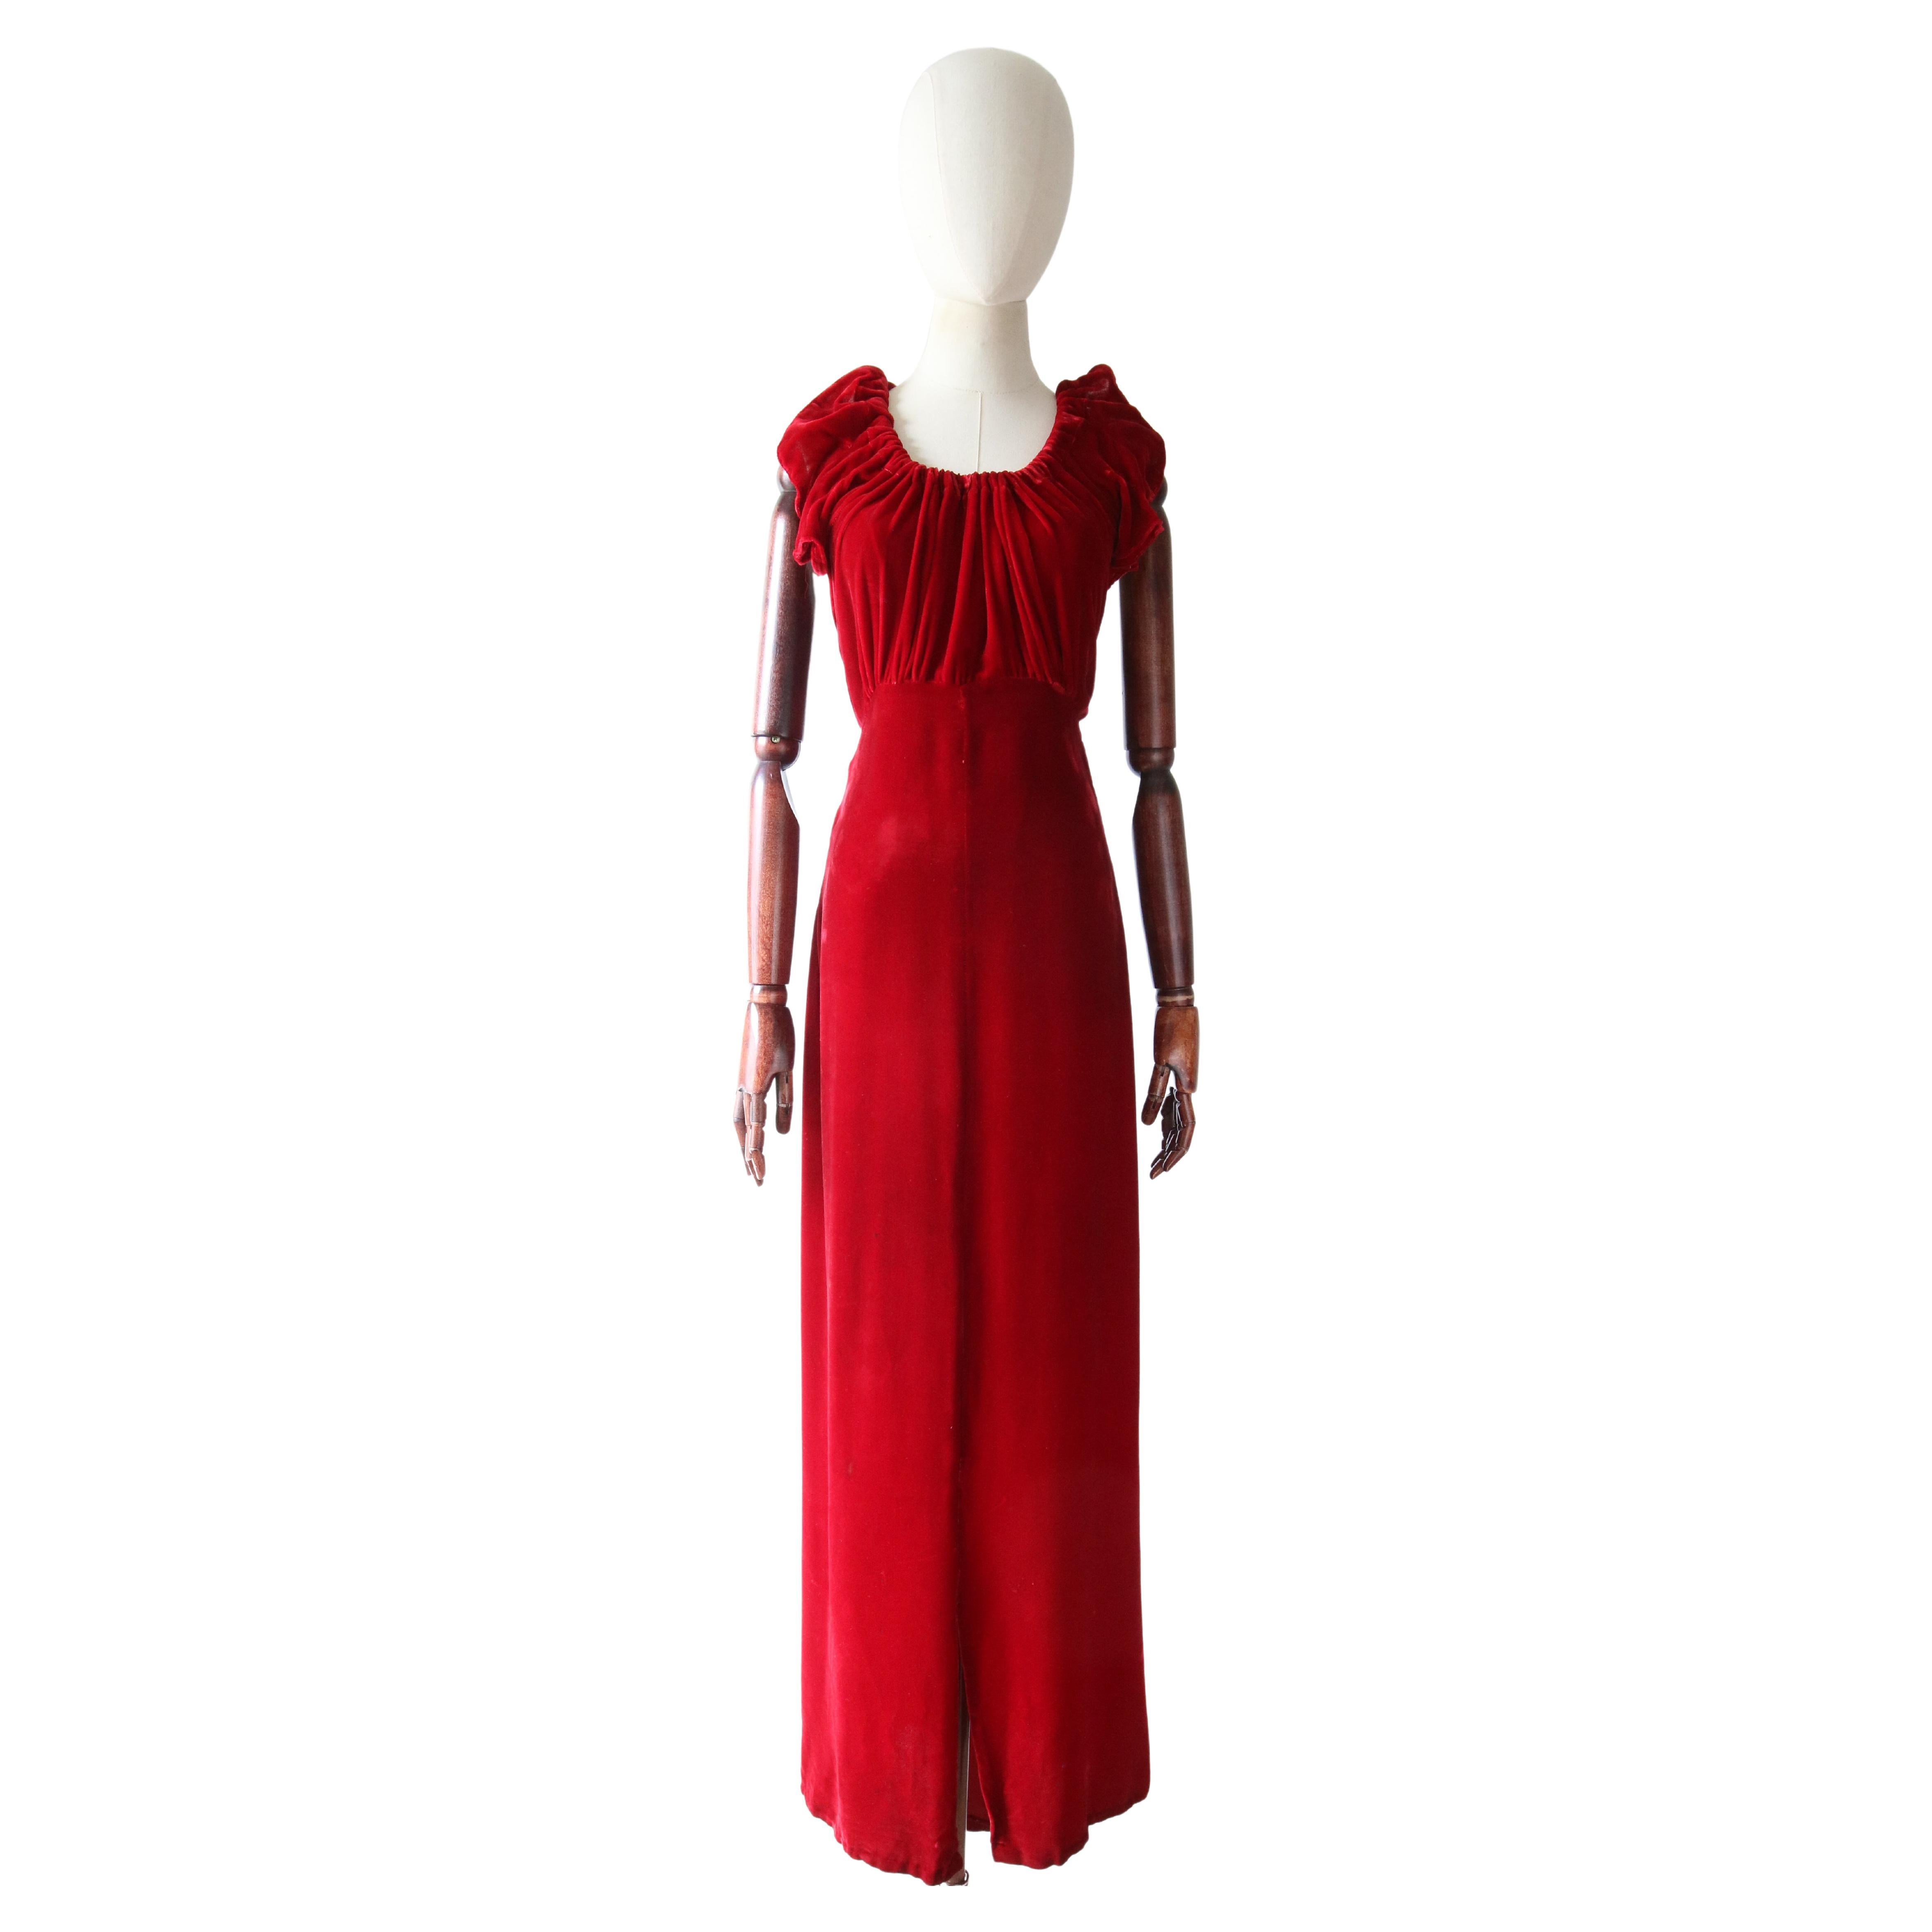 Vintage 1930's red velvet dress and jacket 1930's bias cut UK 6- 8 US 2-4